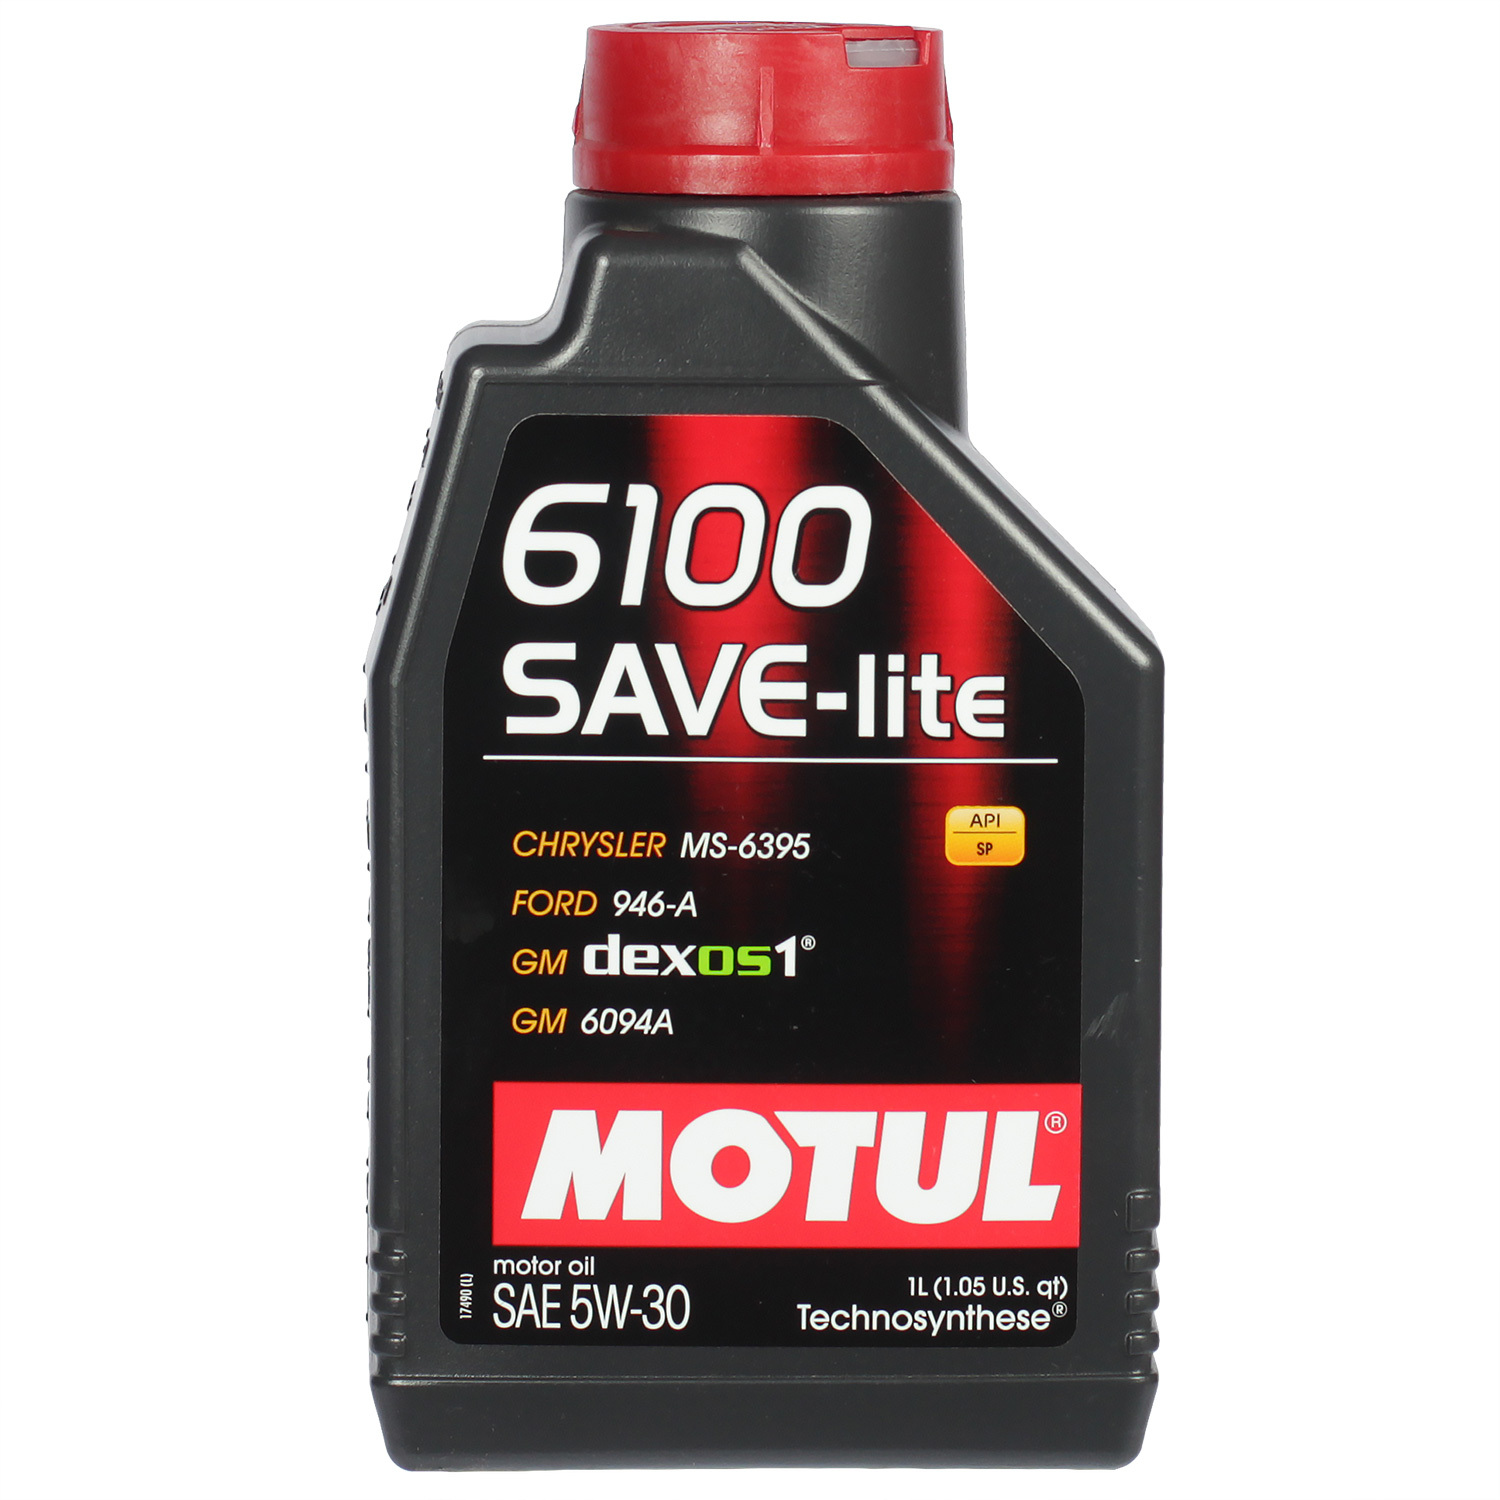 Motul Моторное масло Motul 6100 Save-lite 5W-30, 1 л motul моторное масло motul 6100 synergie 5w 30 4 л